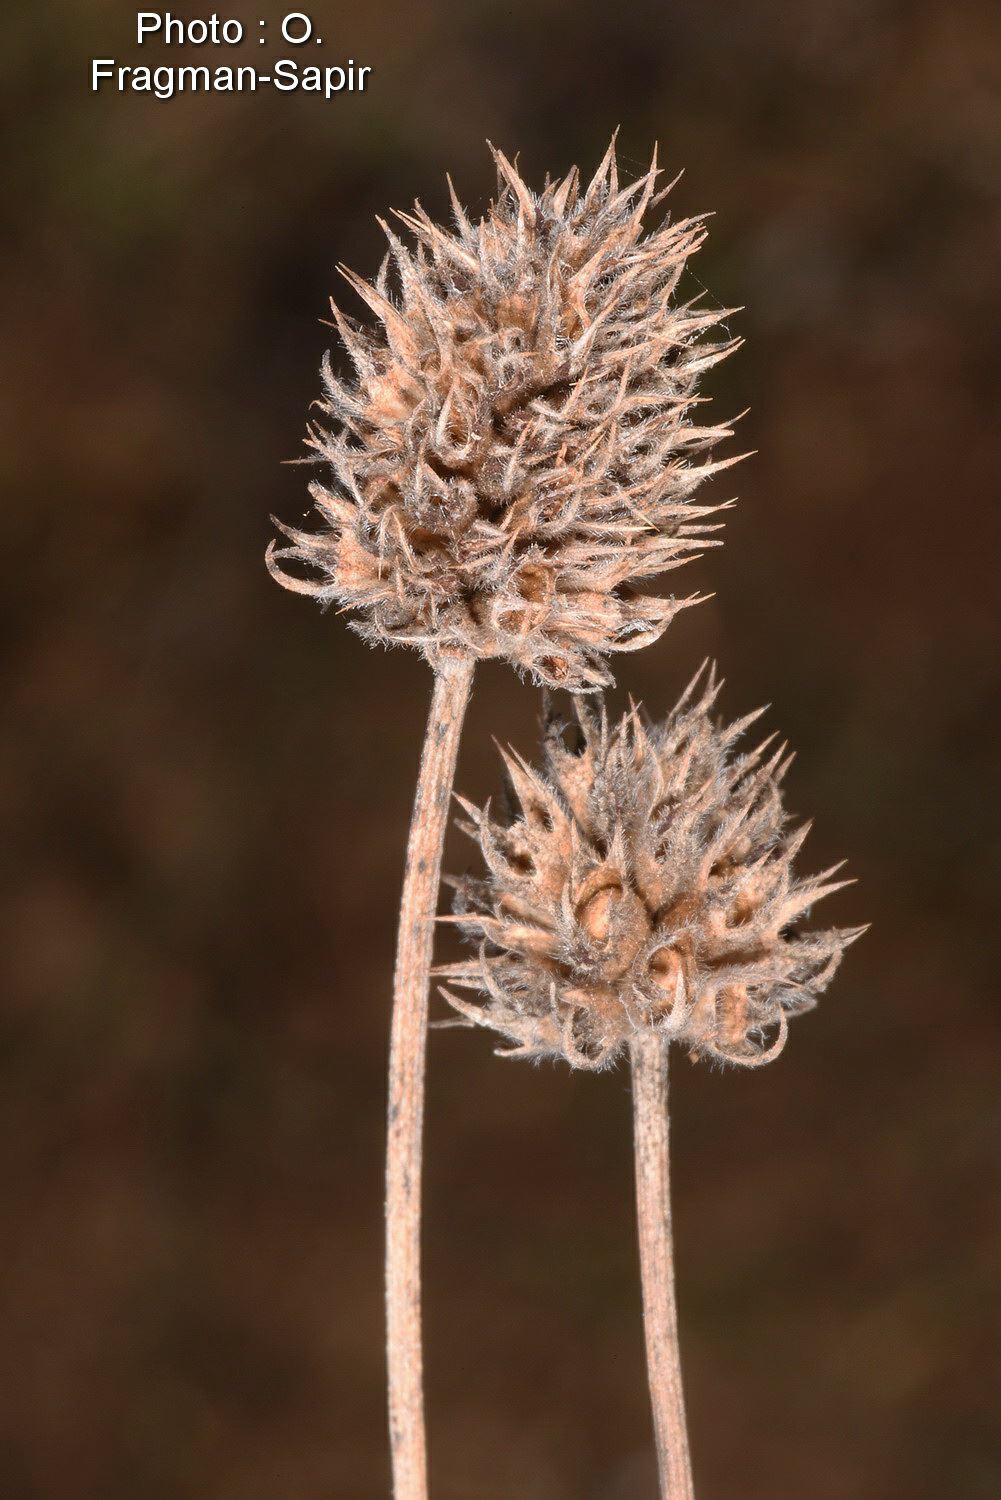 Trifolium alexandrinum - Egyptian Clover, Beerseem Cover, תלתן אלכסנדרוני, תלתן אלכסנדרוני